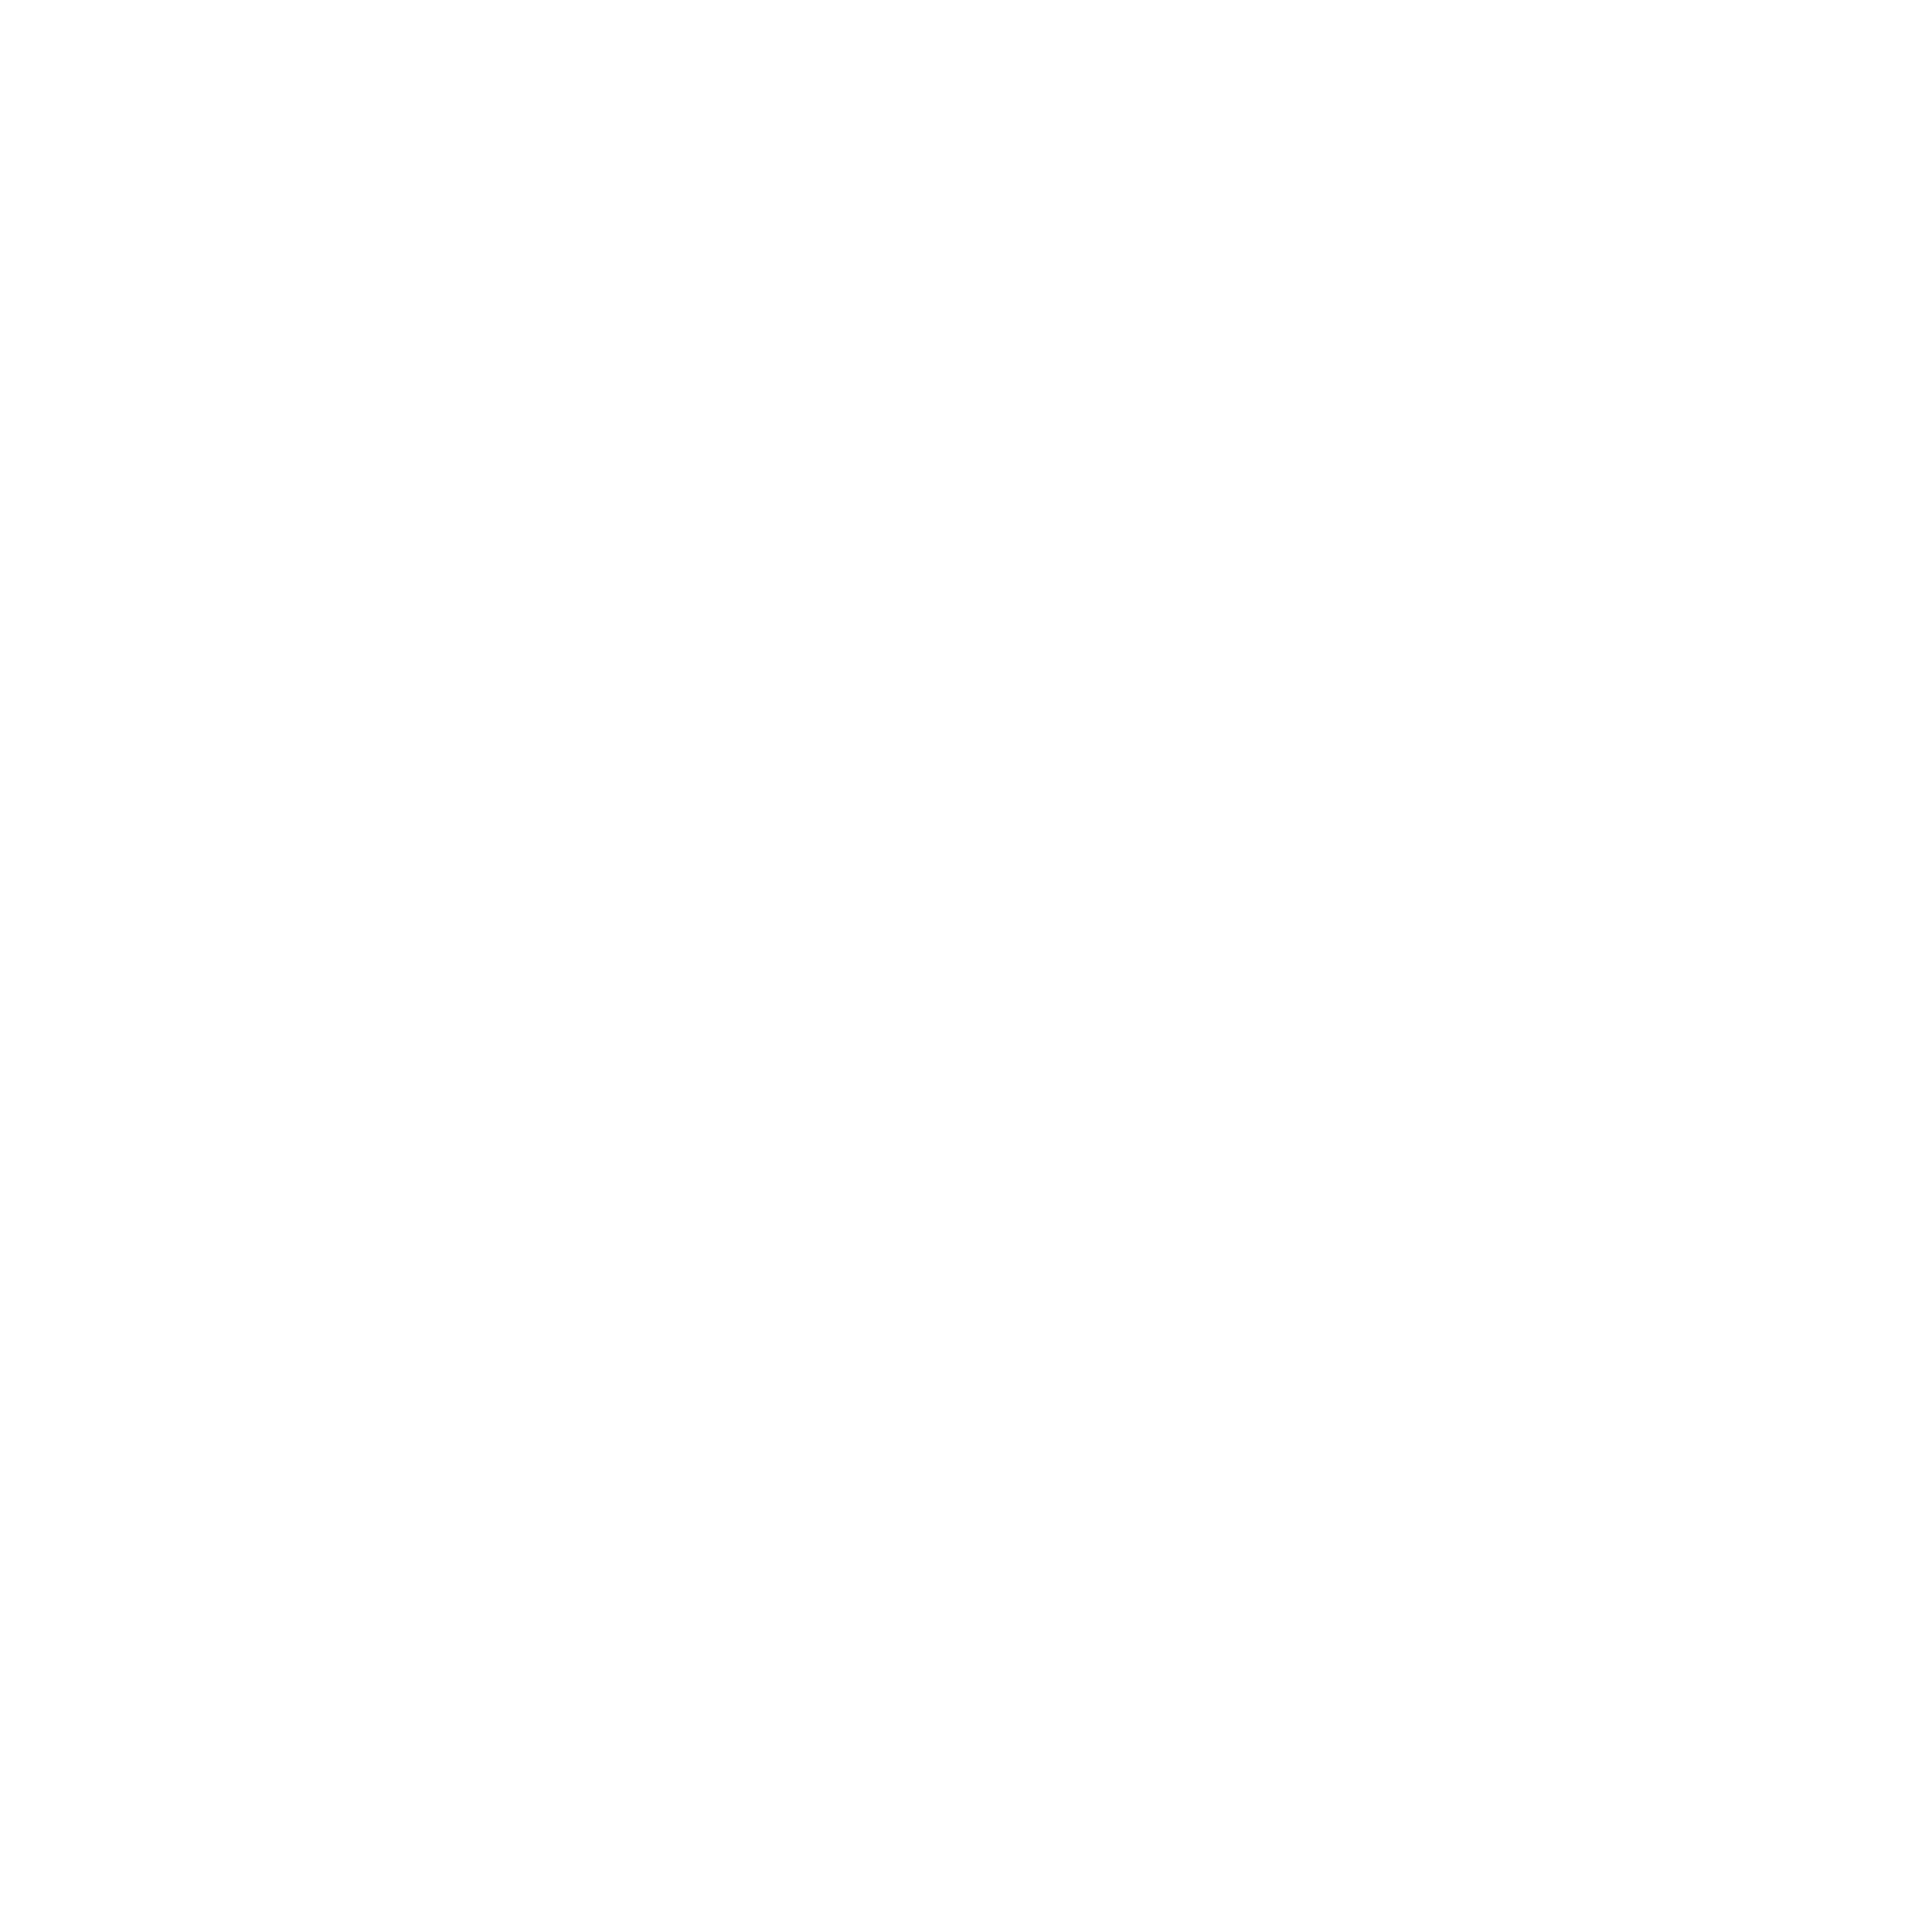 Surbiton New Life Baptist Church